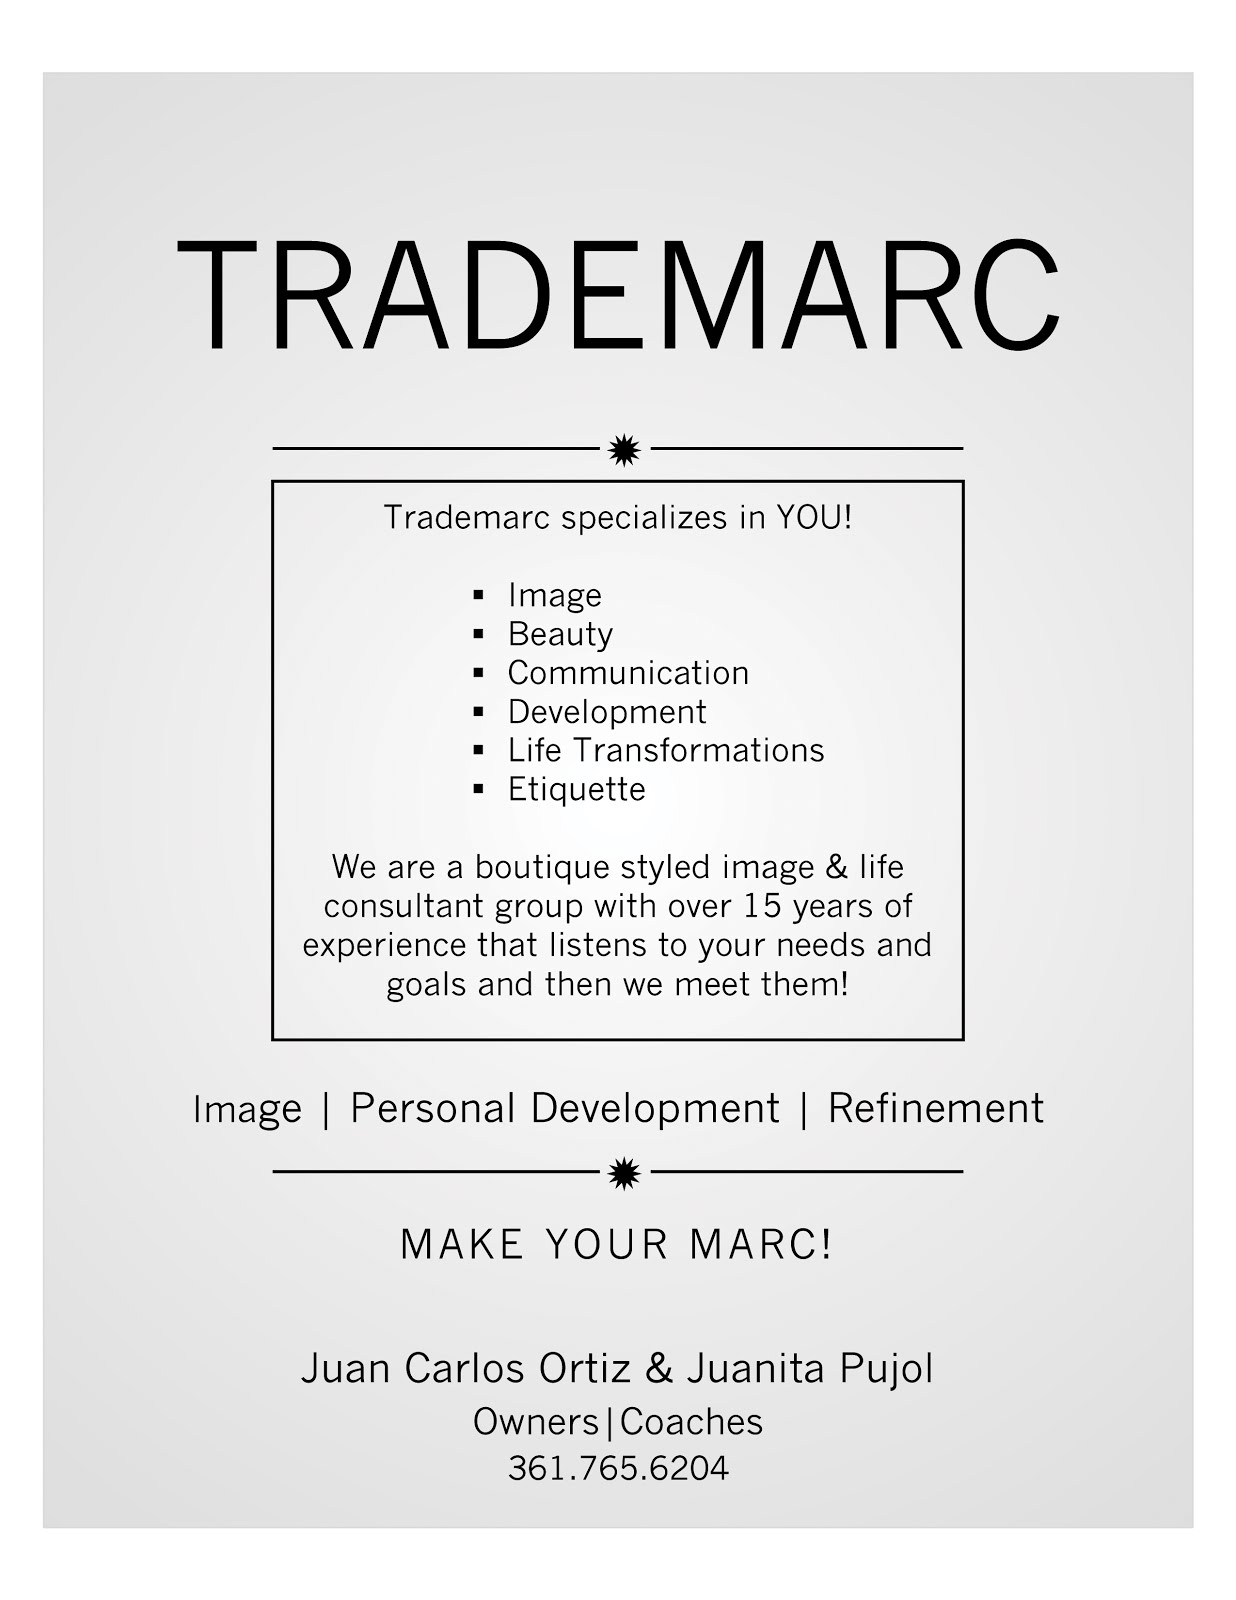 TradeMarc